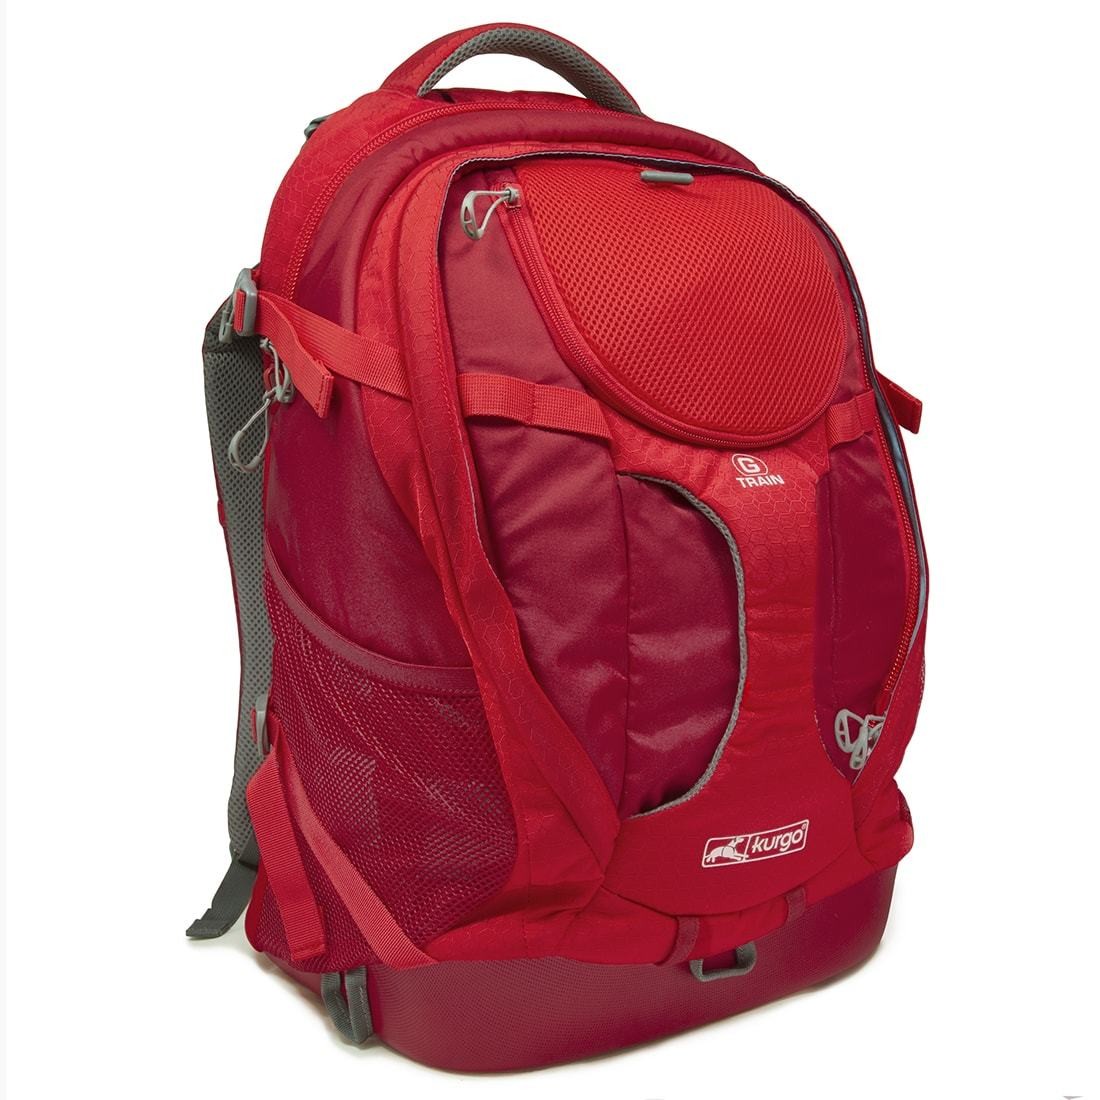 Kurgo G-Train Dog Carrier Backpack- red